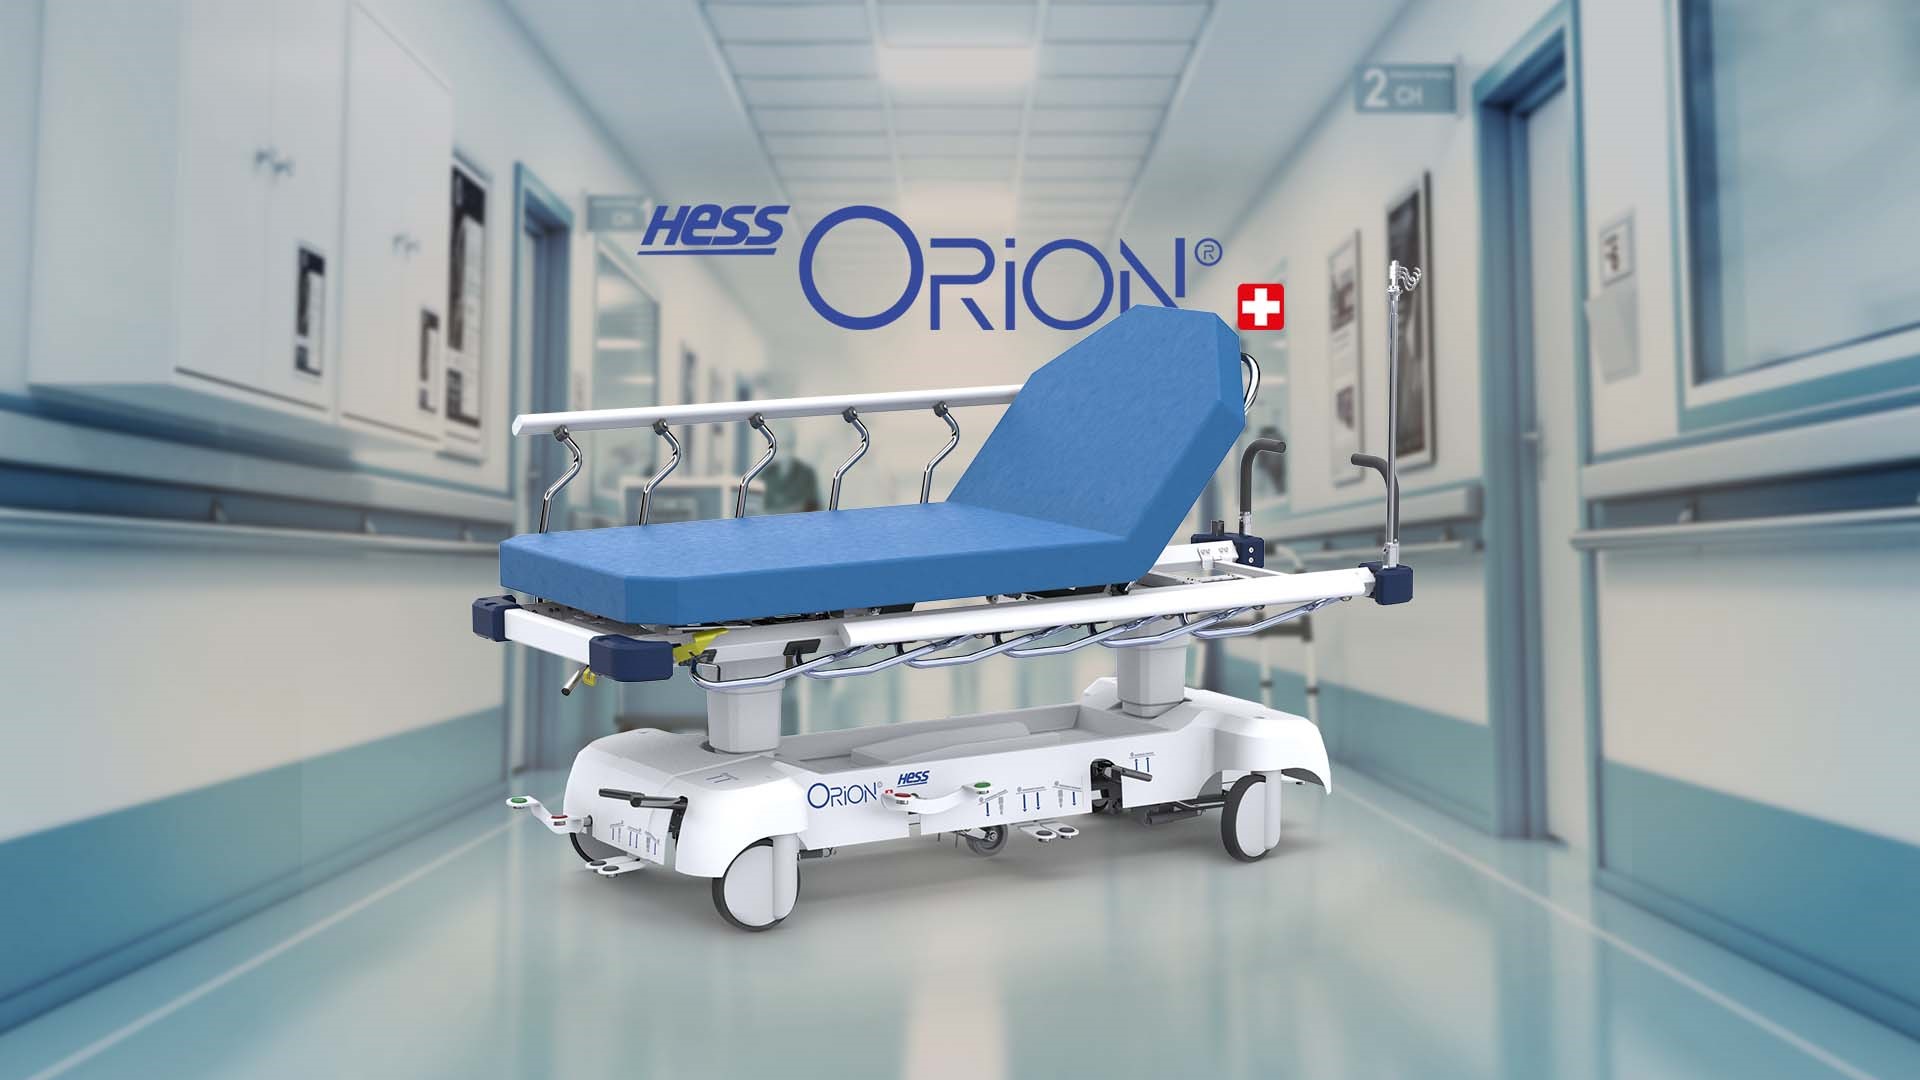 814_News-Orion